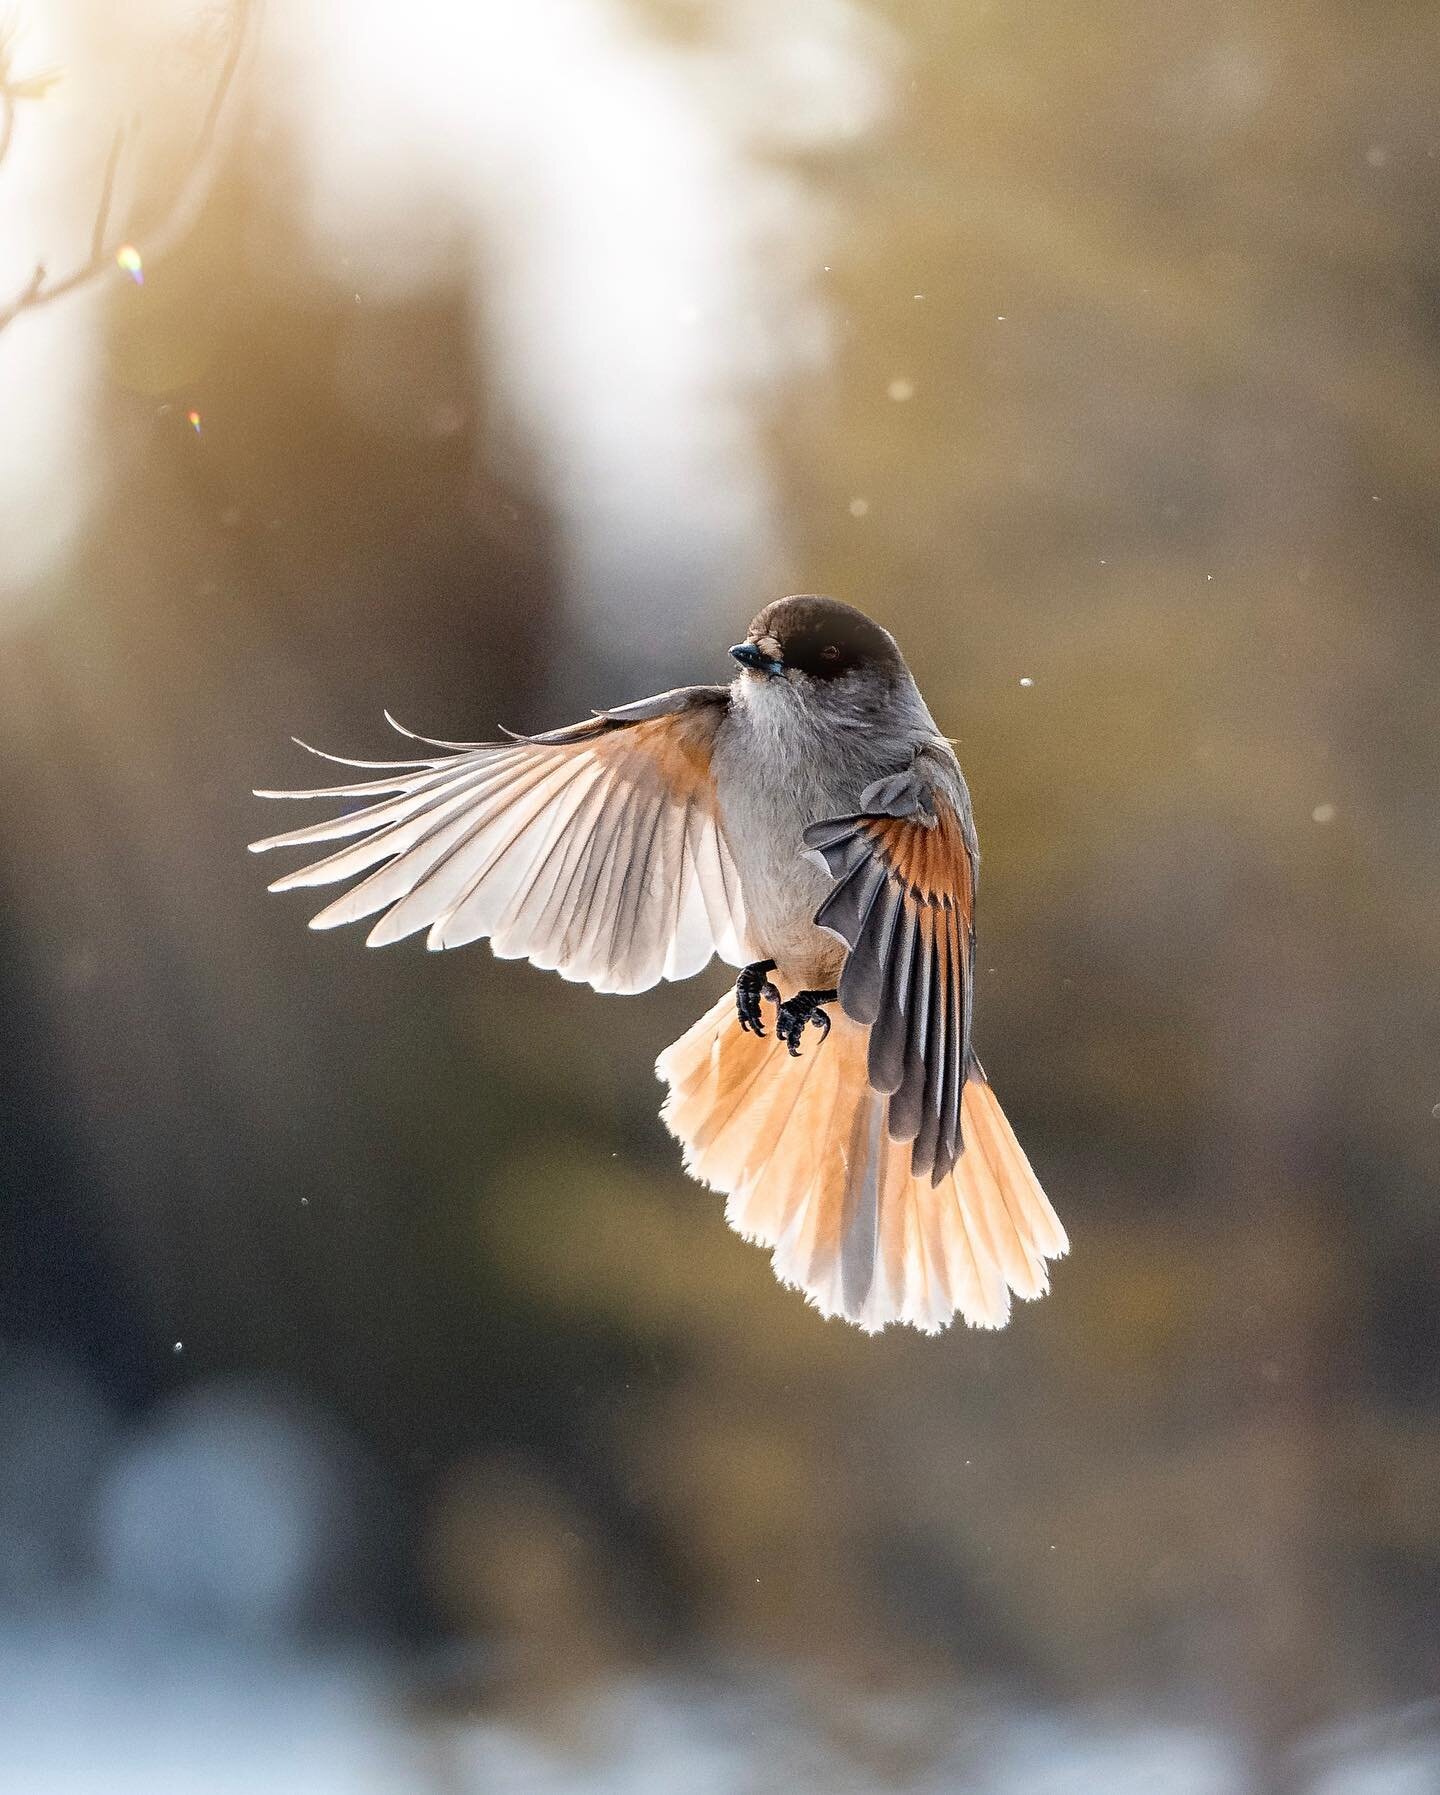 Spring birds, snow and lots of light ☀️🫶

📷 Sony a1 + 70-200 GM
. ⠀⠀⠀⠀⠀⠀⠀⠀⠀ ⠀⠀⠀⠀⠀⠀⠀⠀⠀
#sonyalpha #sonyalphaone #sonya1 #bealpha #sony70200 #70200gm #sony70200mm #sony70200gm #birdinflight #birdphotography #wildlifephotography #animalphotography #vi